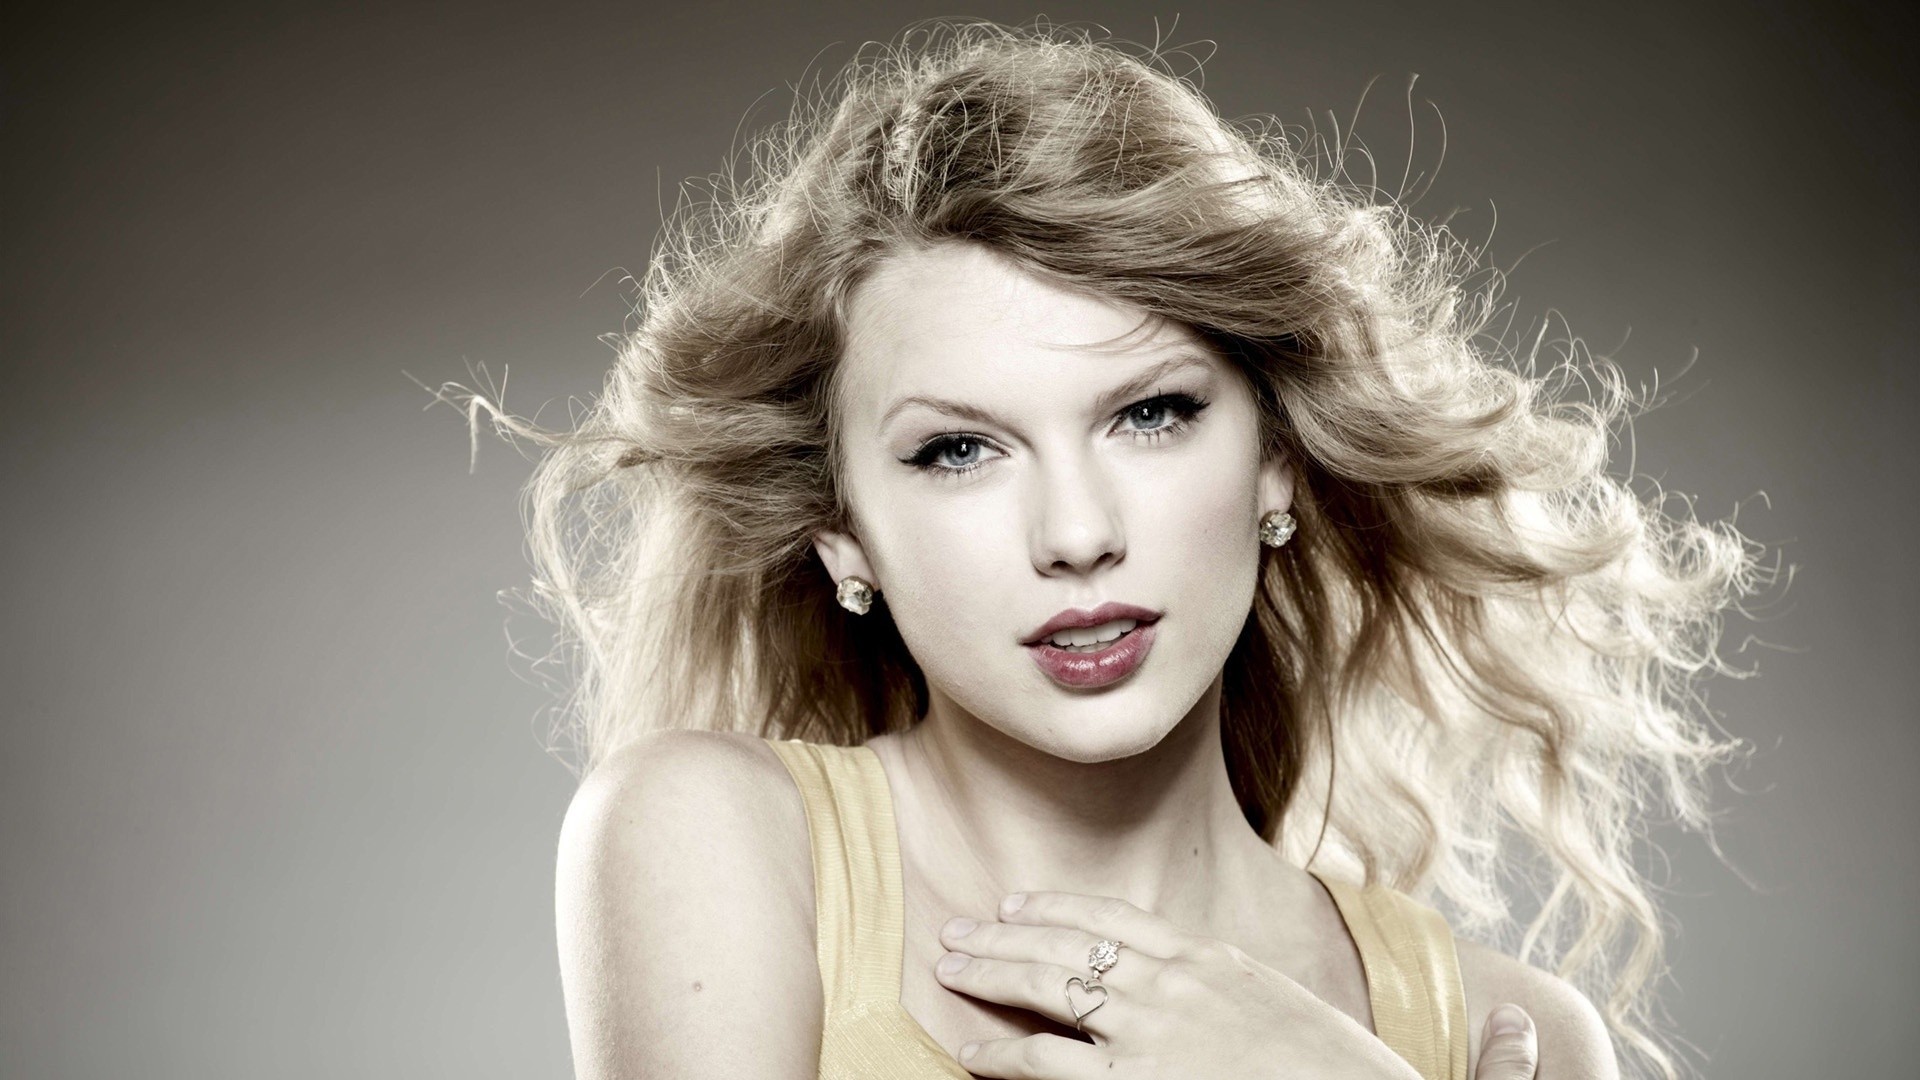 Beautiful Taylor Swift Wallpaper